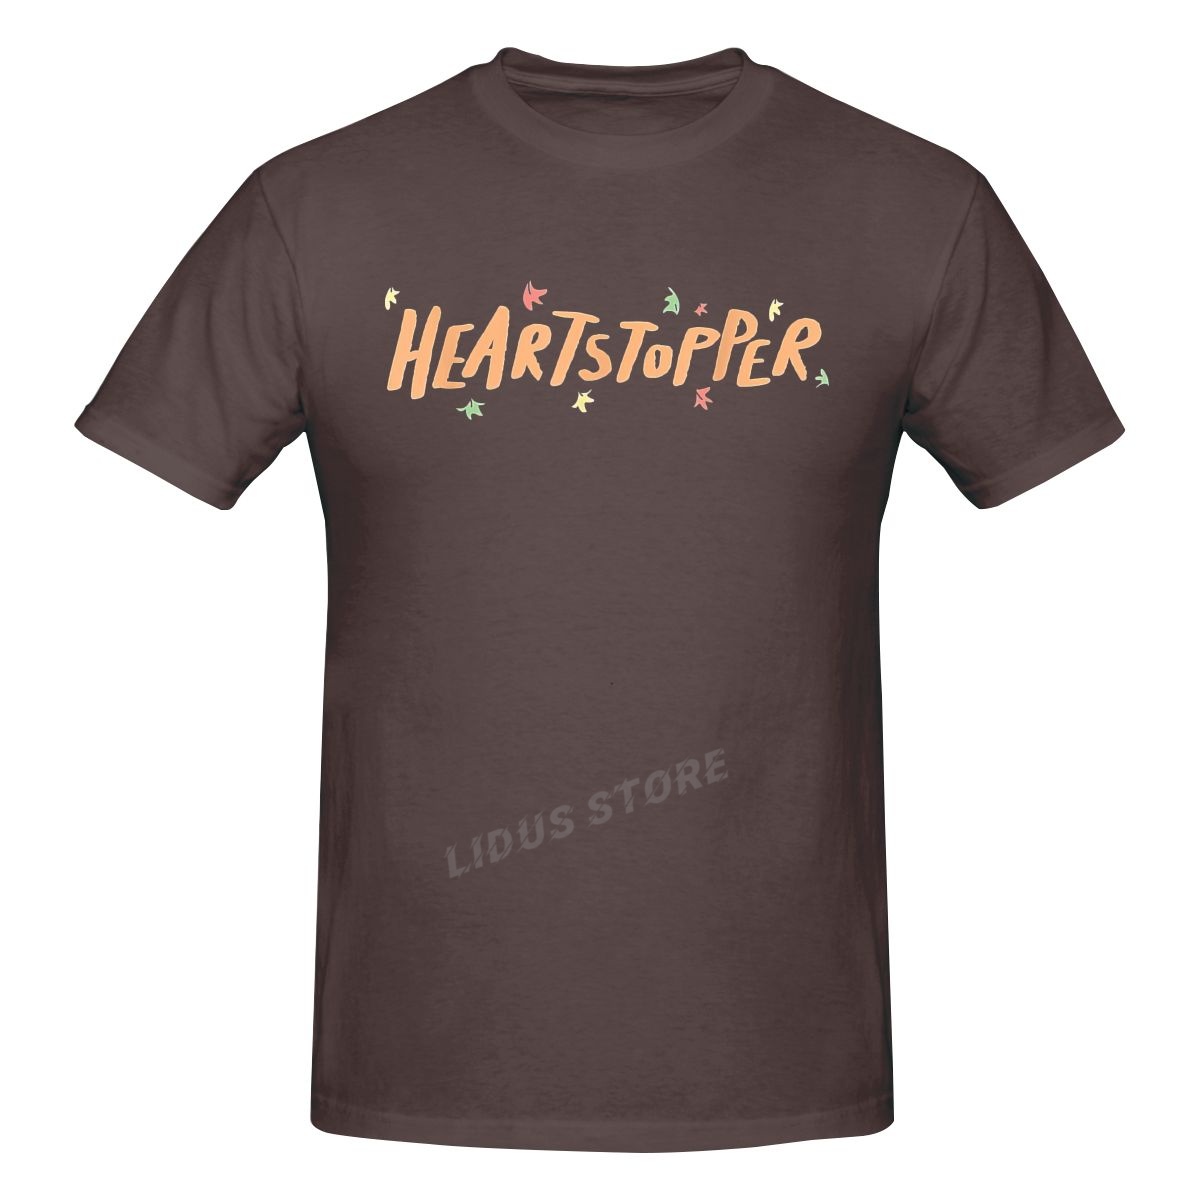 Heartstopper Leaves Lover Heartstopper Love LGBT Gay T Shirt Clothing Graphics Tshirt Short Sleeve Sweatshirt Unisex Shirt Tee